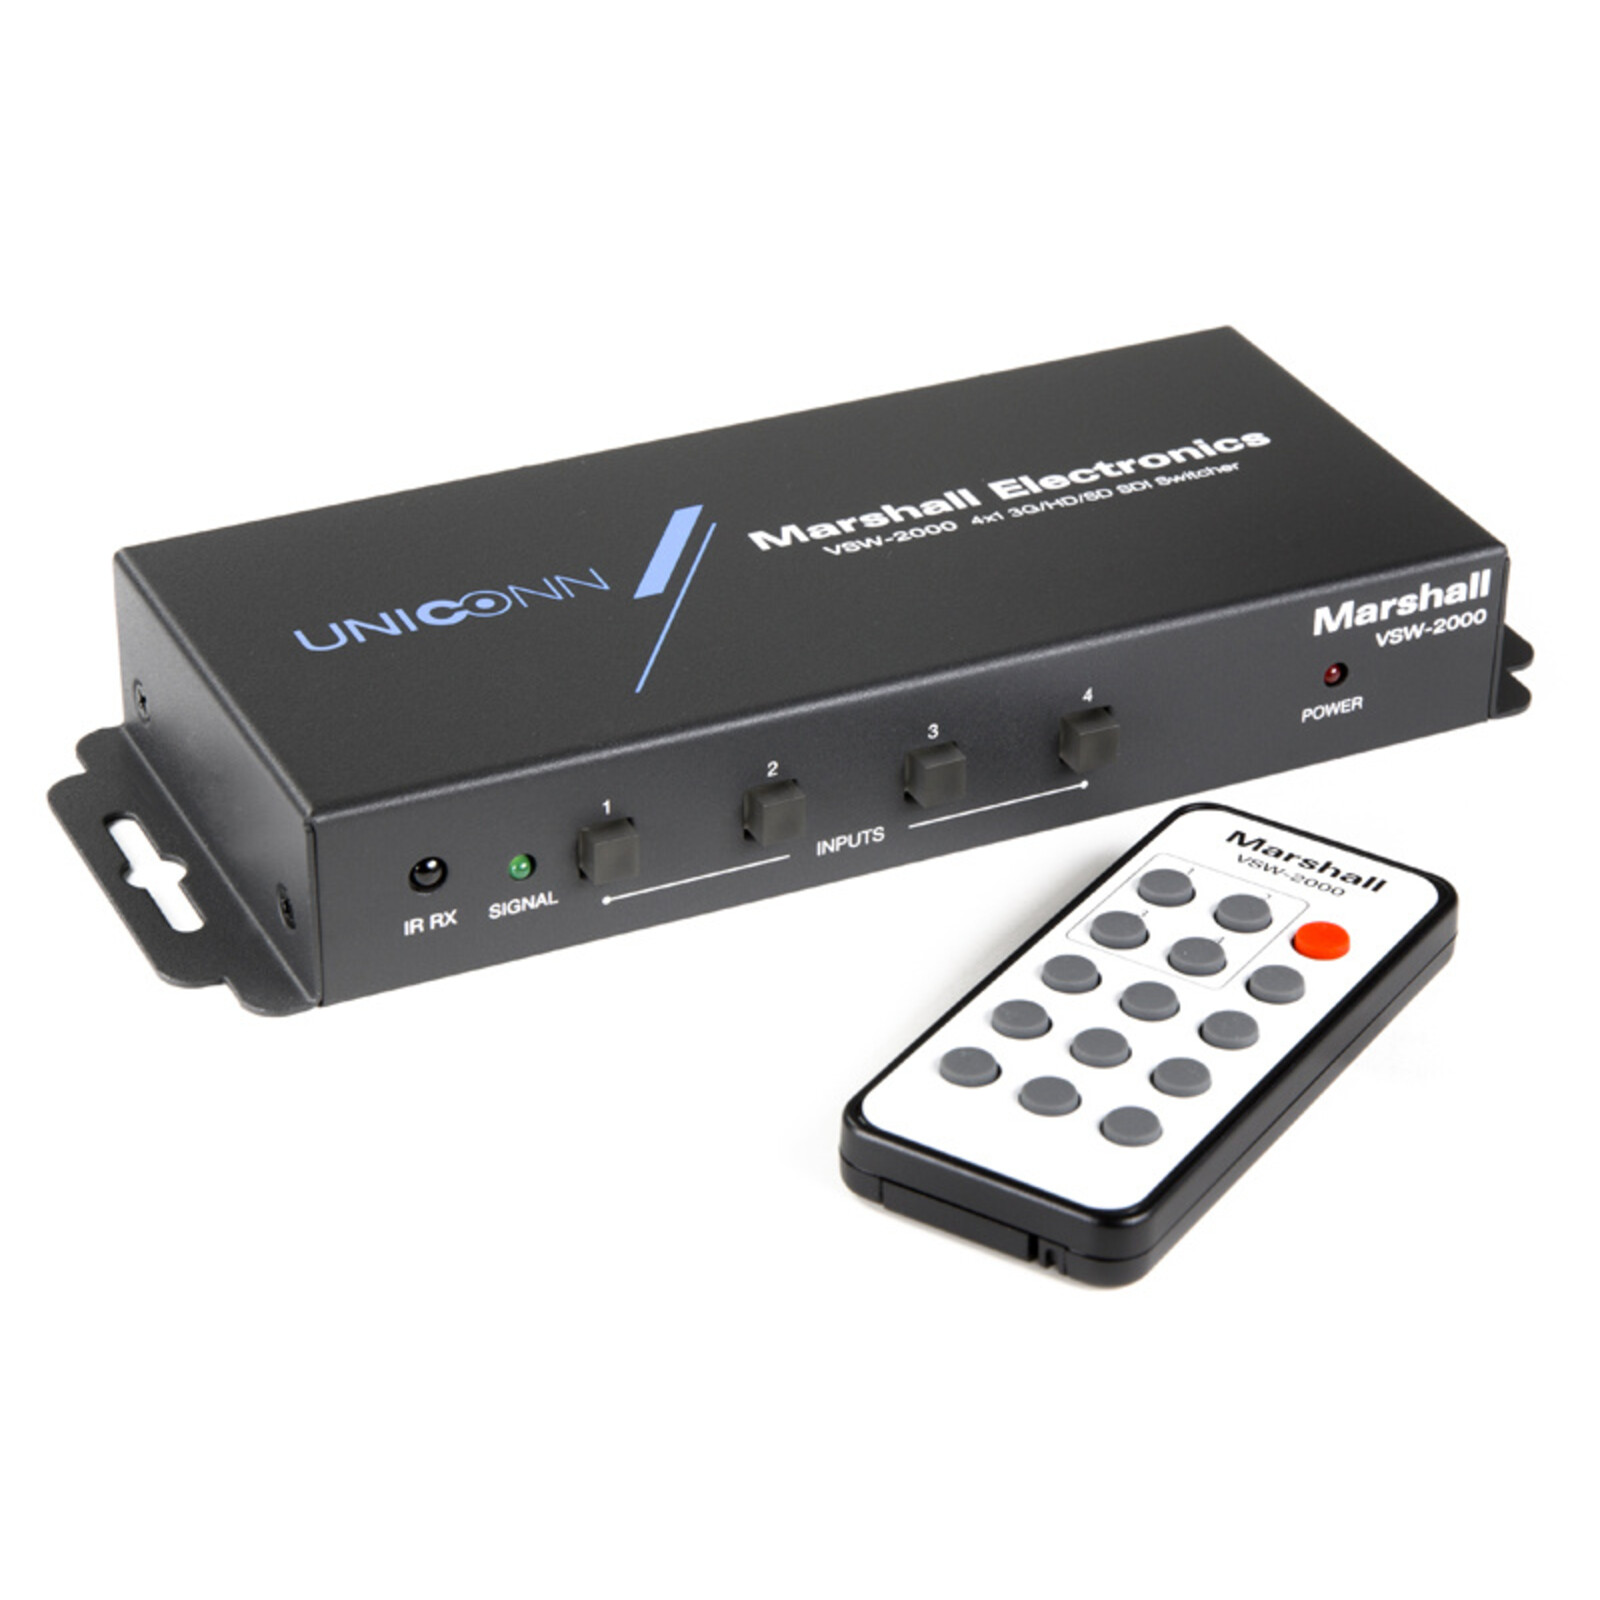 Marshall 4-Input 3G-SDI Switcher with 3G-SDI Program Output (RS-232 Remote Control)